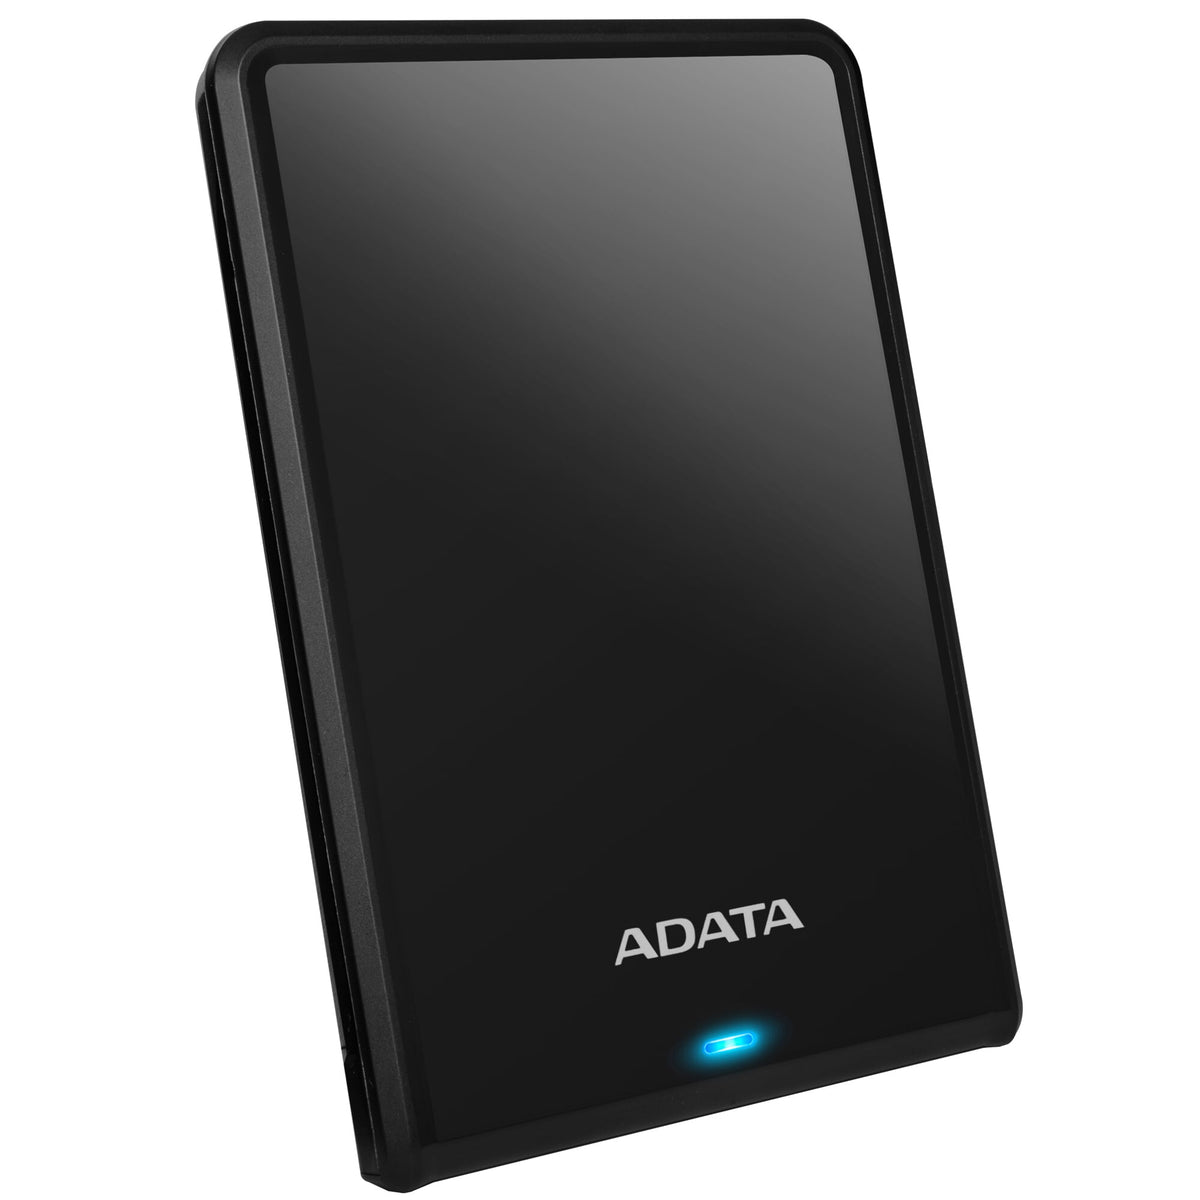 ADATA HV620S - External HDD in Black - 4 TB